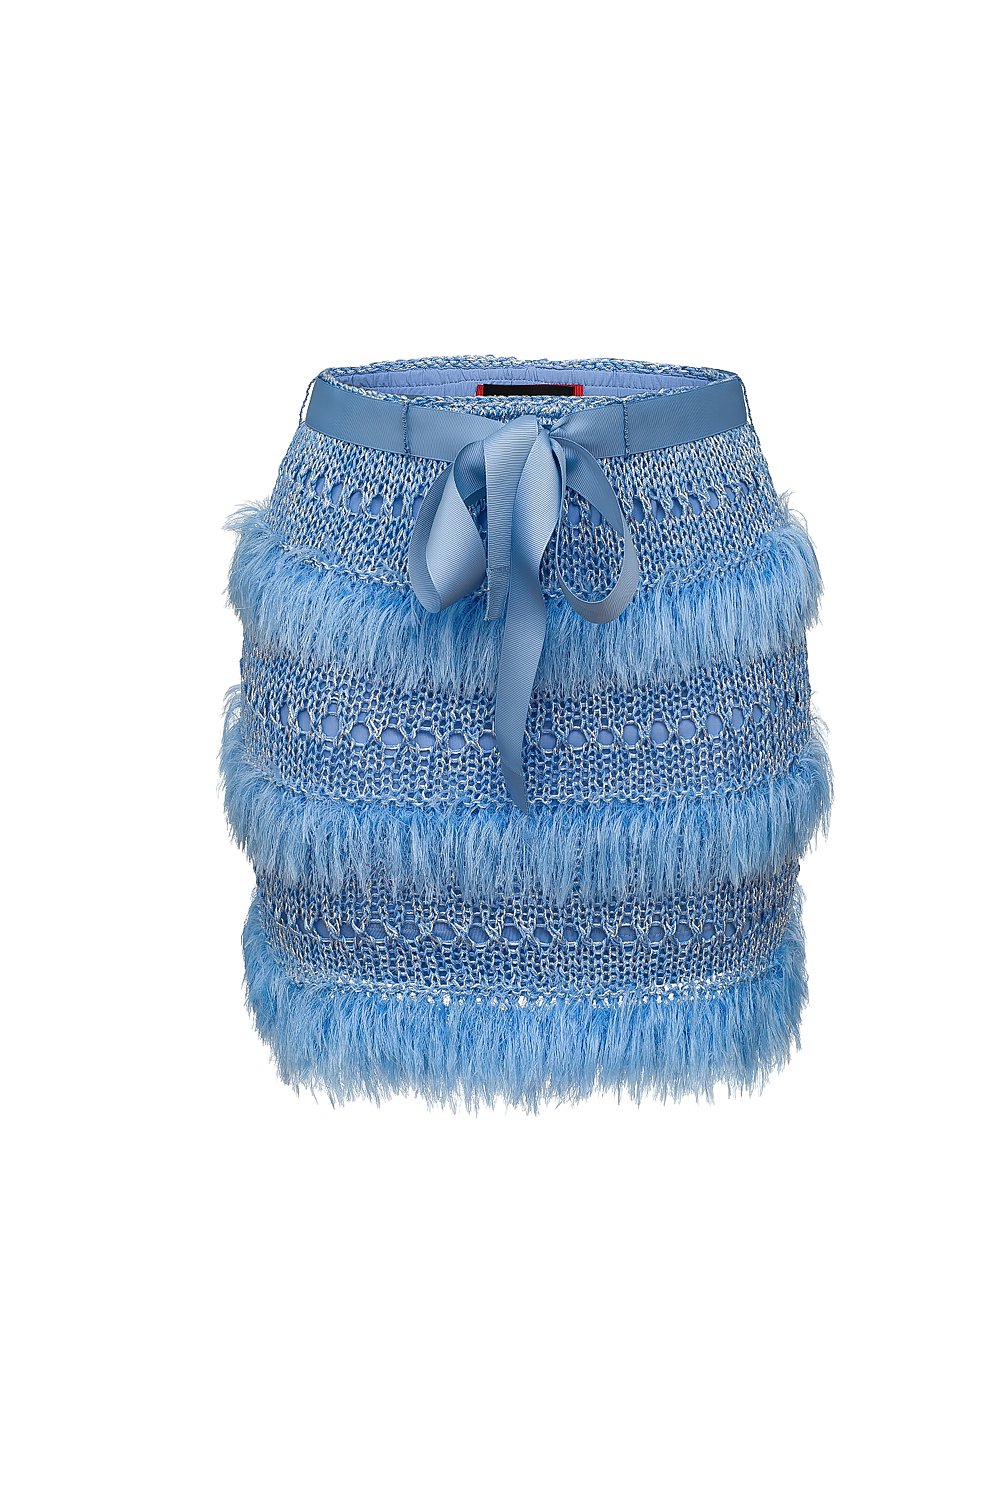 Shop Andreeva Women's Blue Handmade Knit Skirt